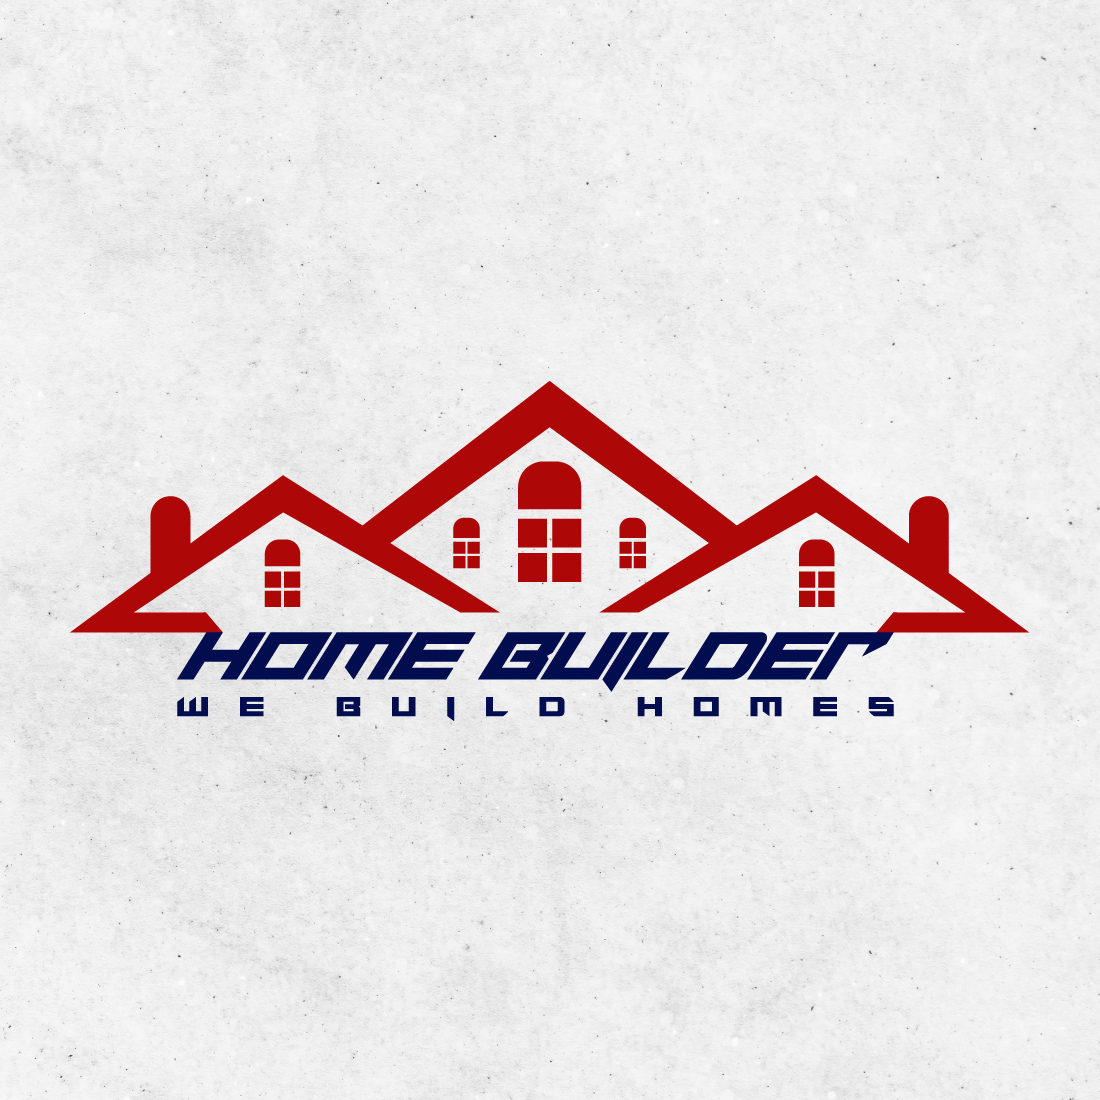 Home Builder Logo preview image.